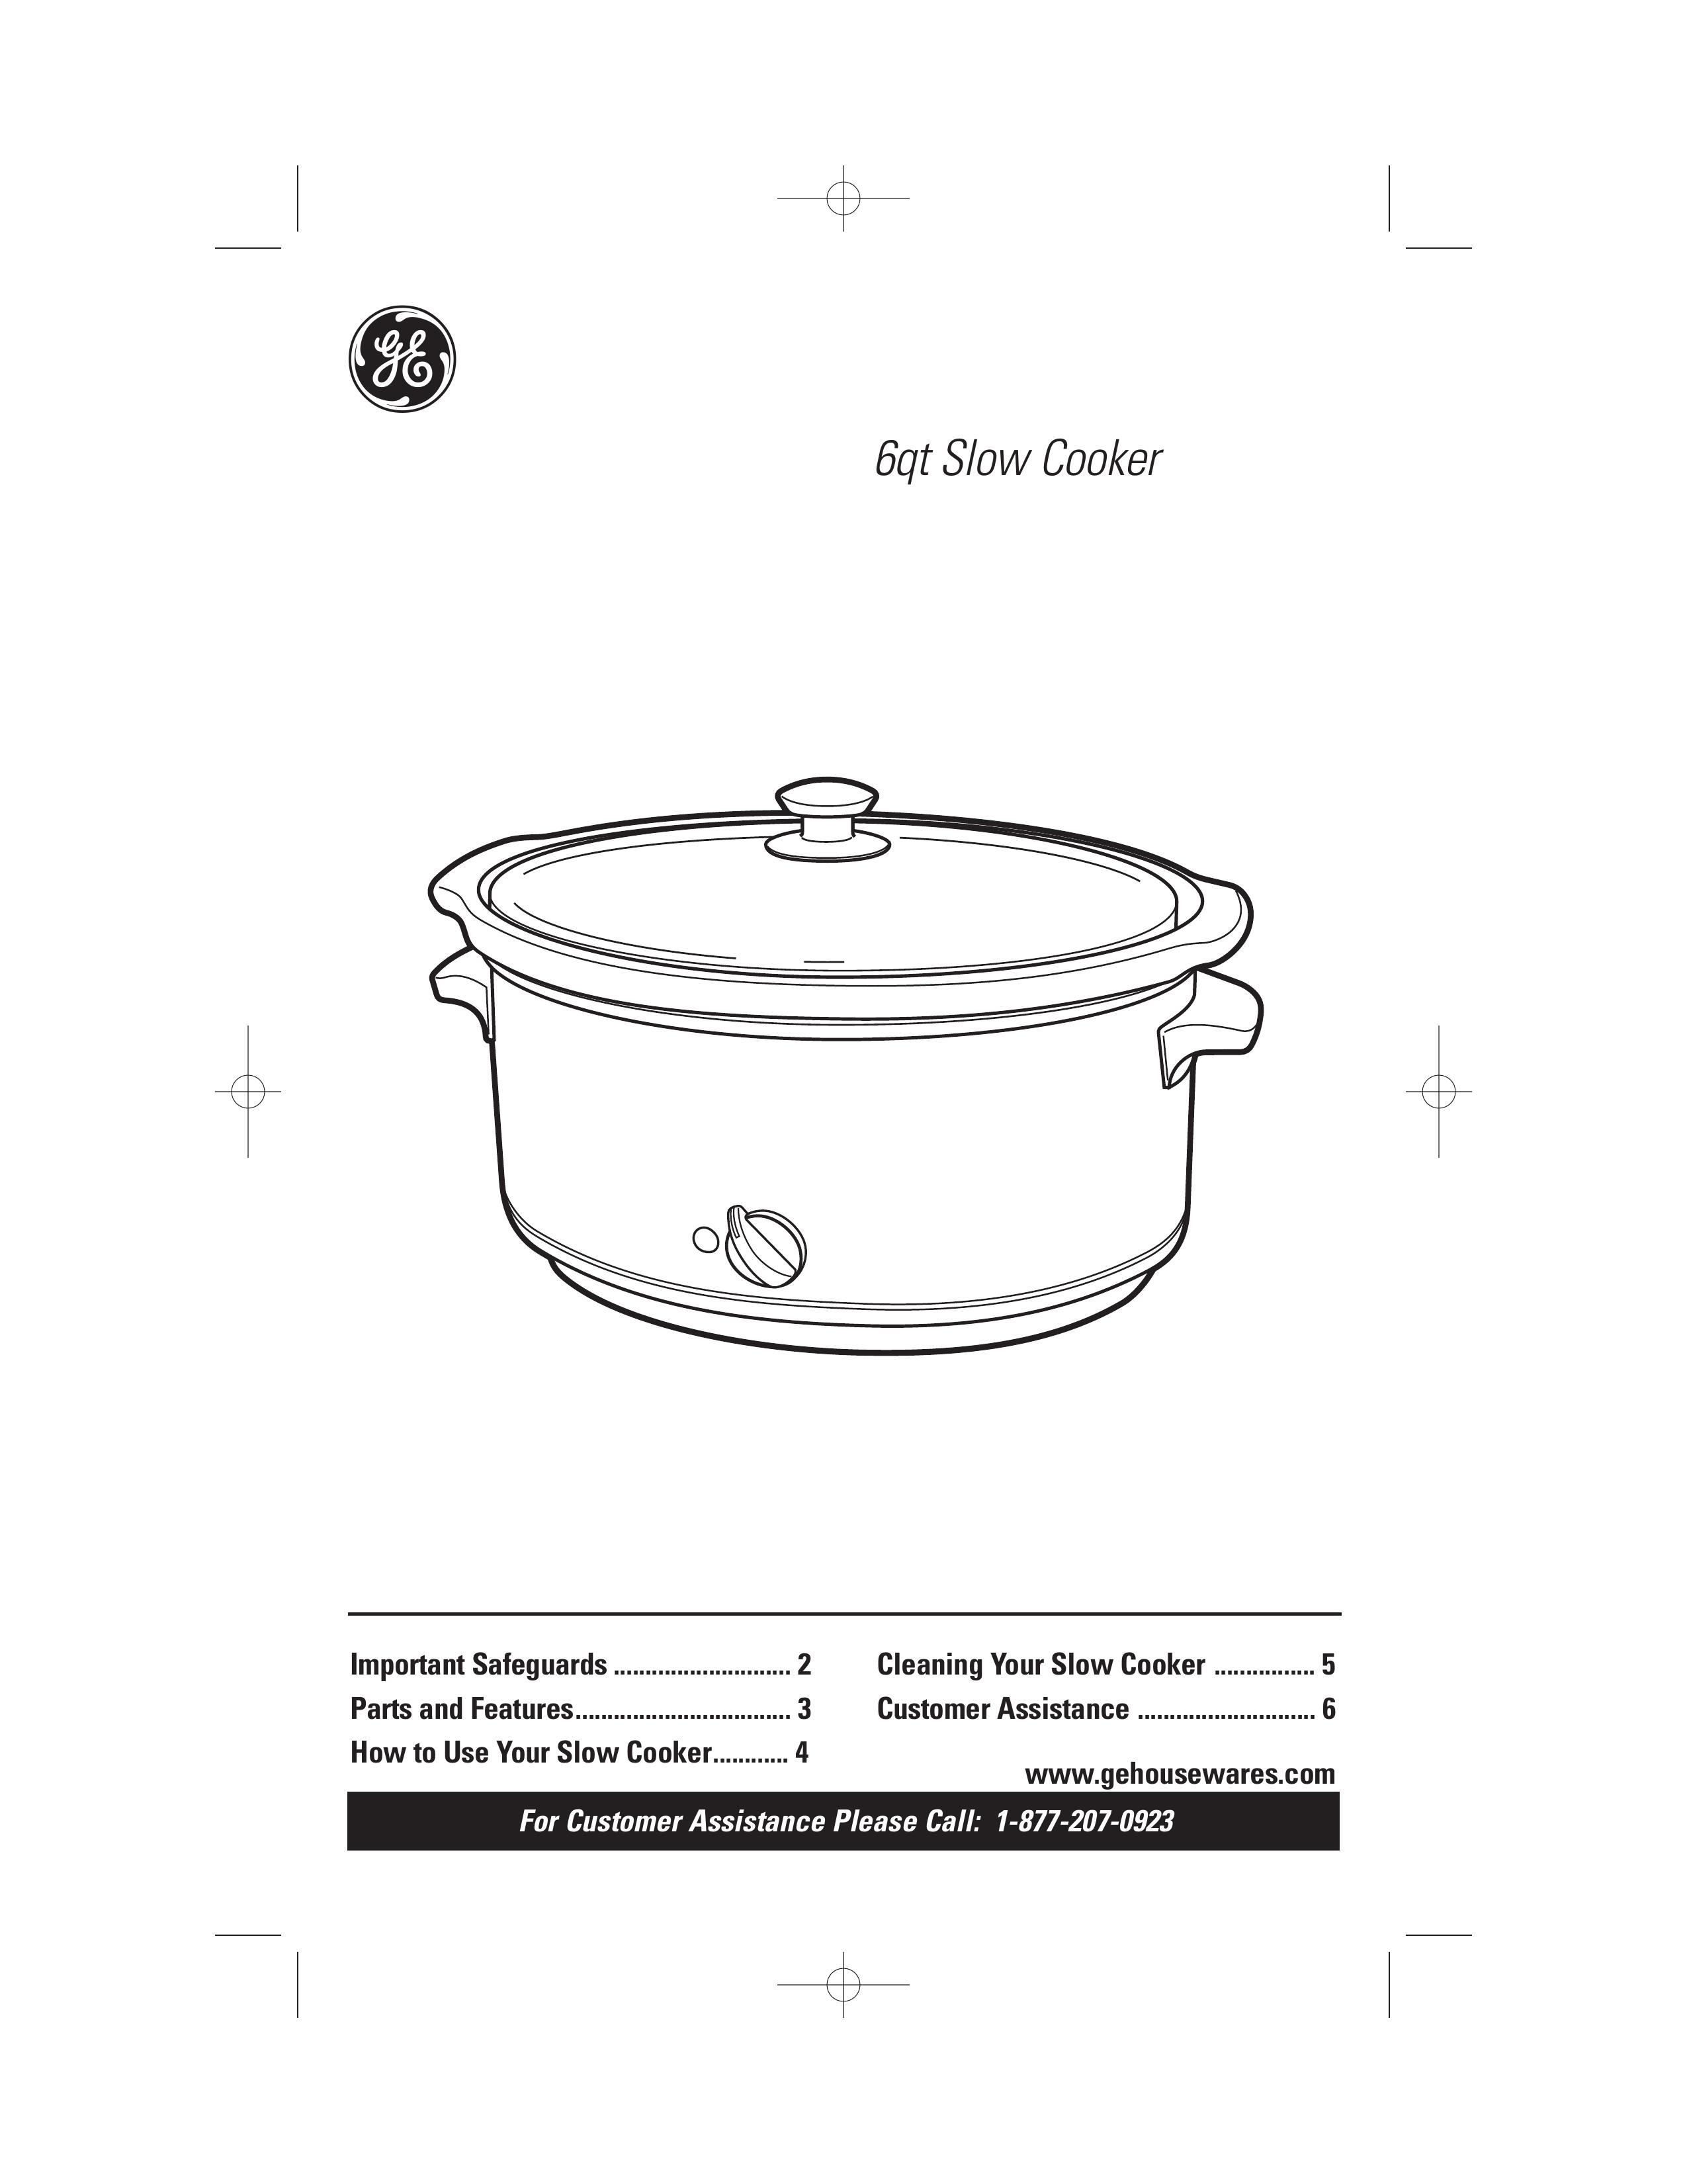 GE 169016 Slow Cooker User Manual